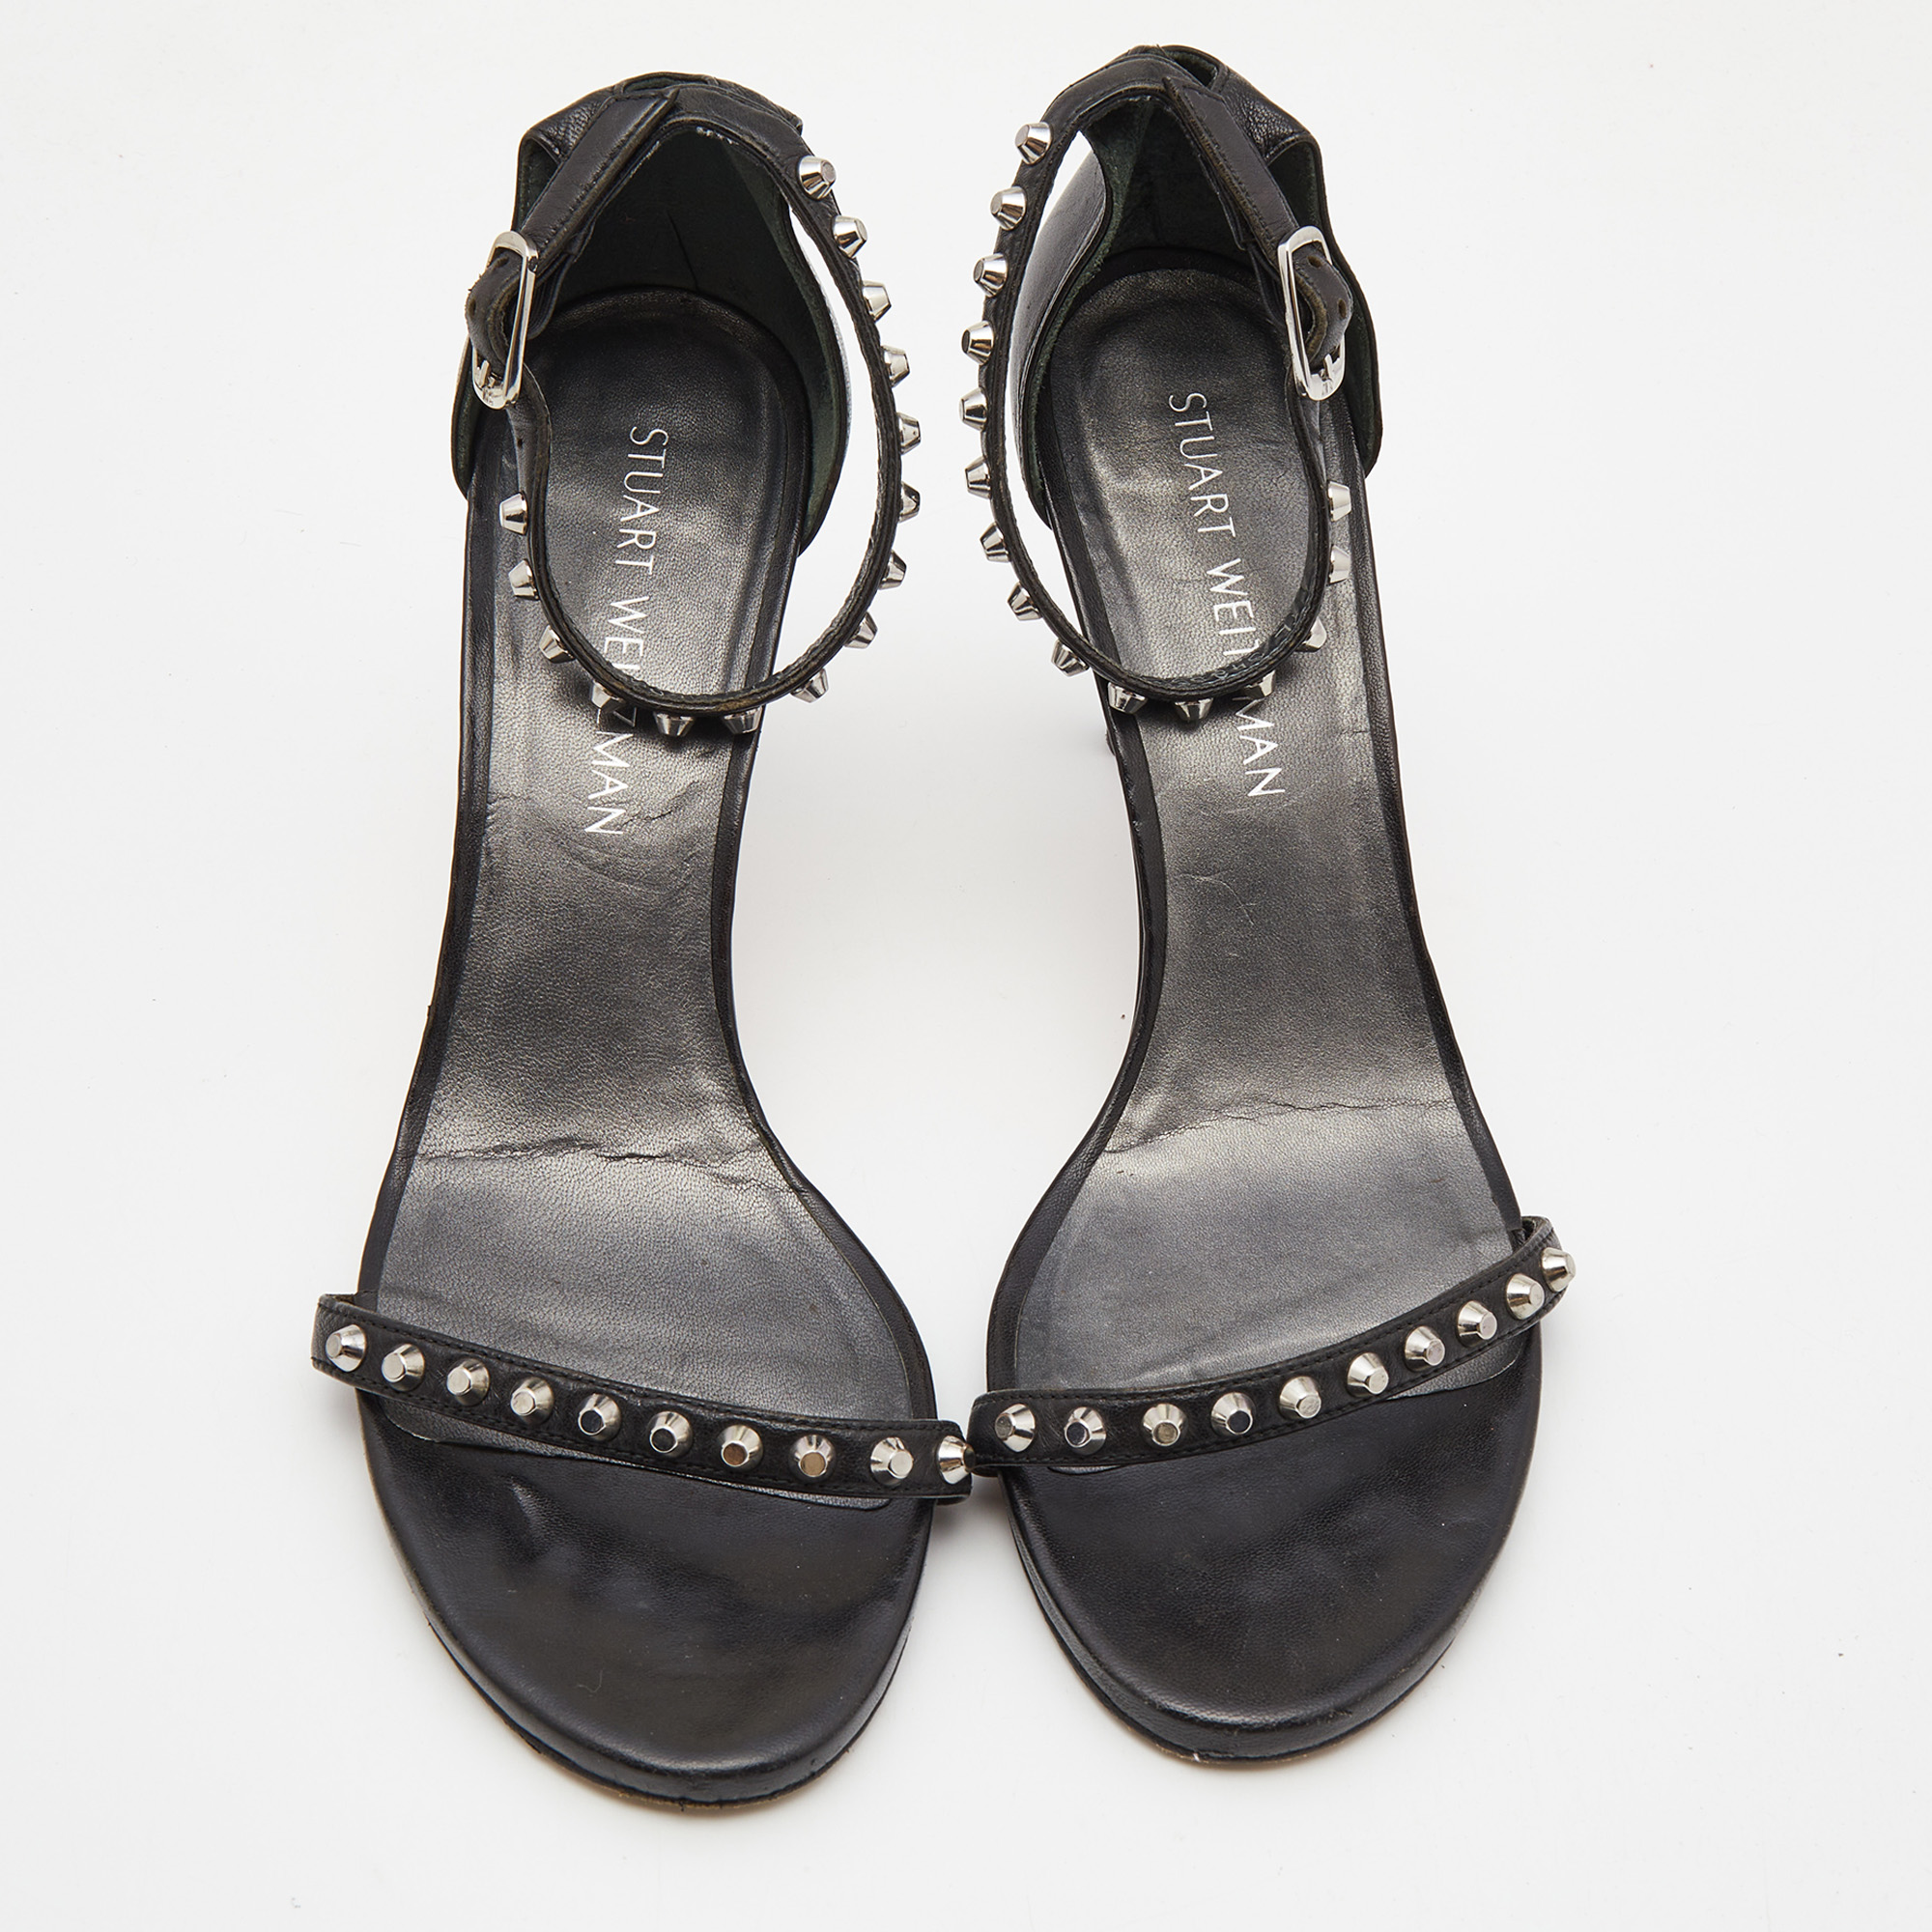 Stuart Weitzman Black Leather Studded Ankle Strap Sandals Size 39